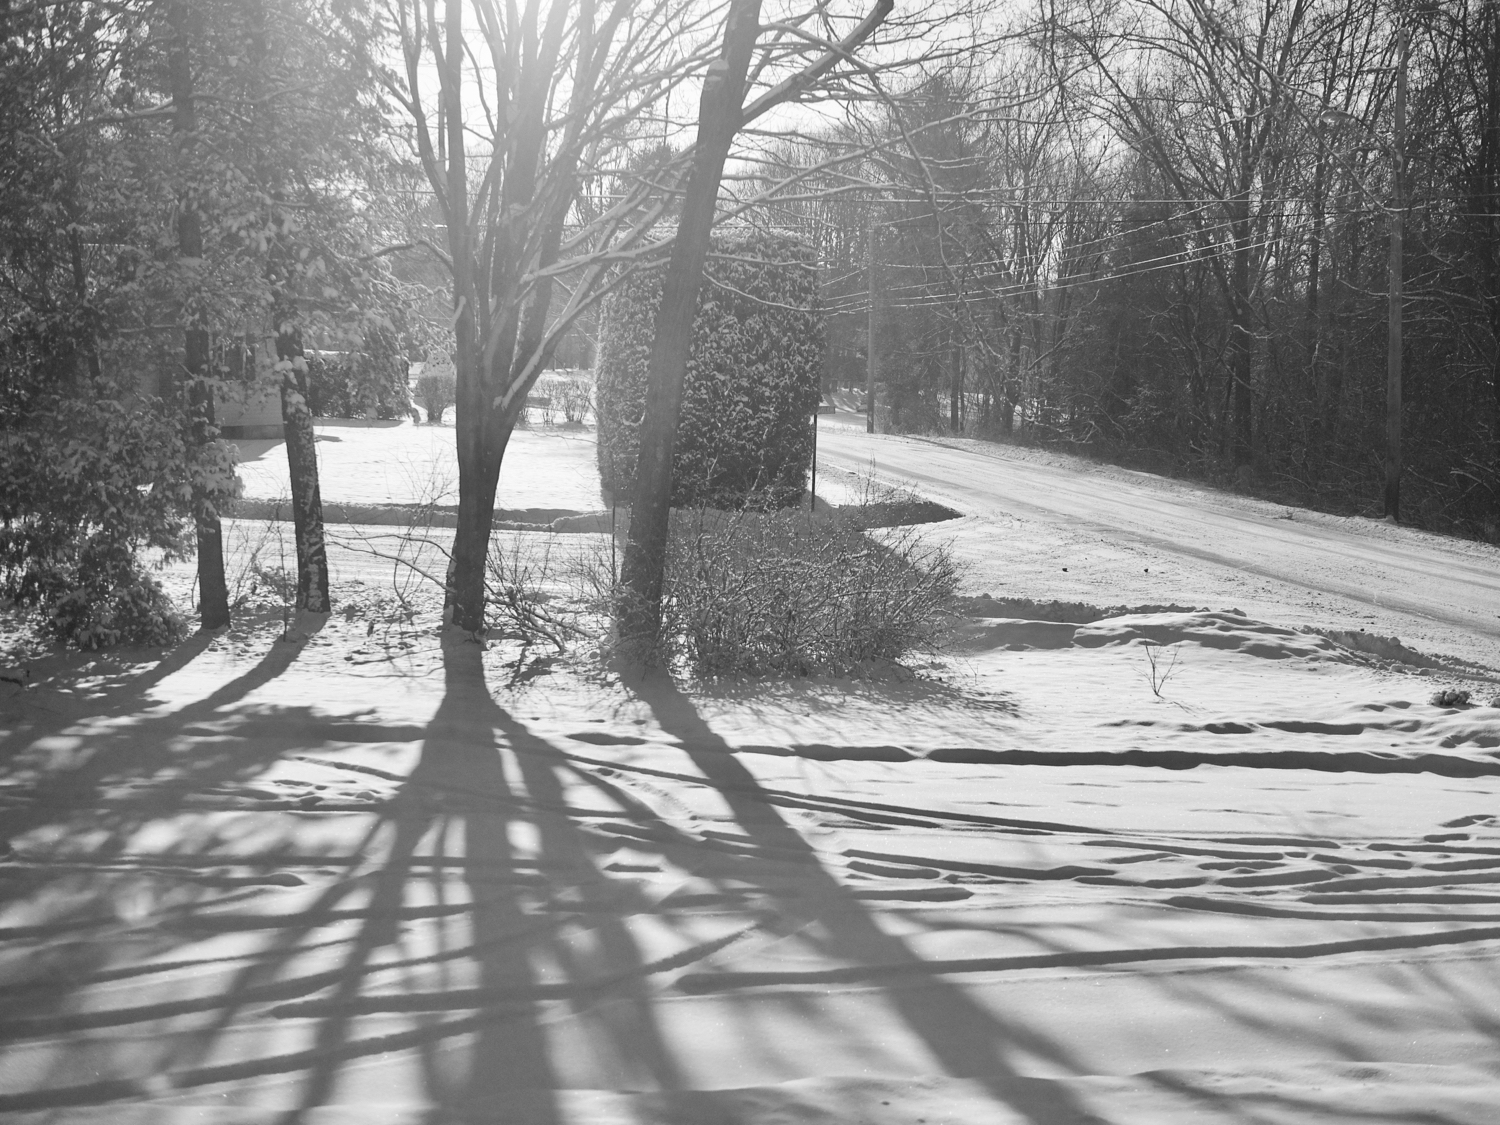 Shadows on snow — copyright Trace Meek